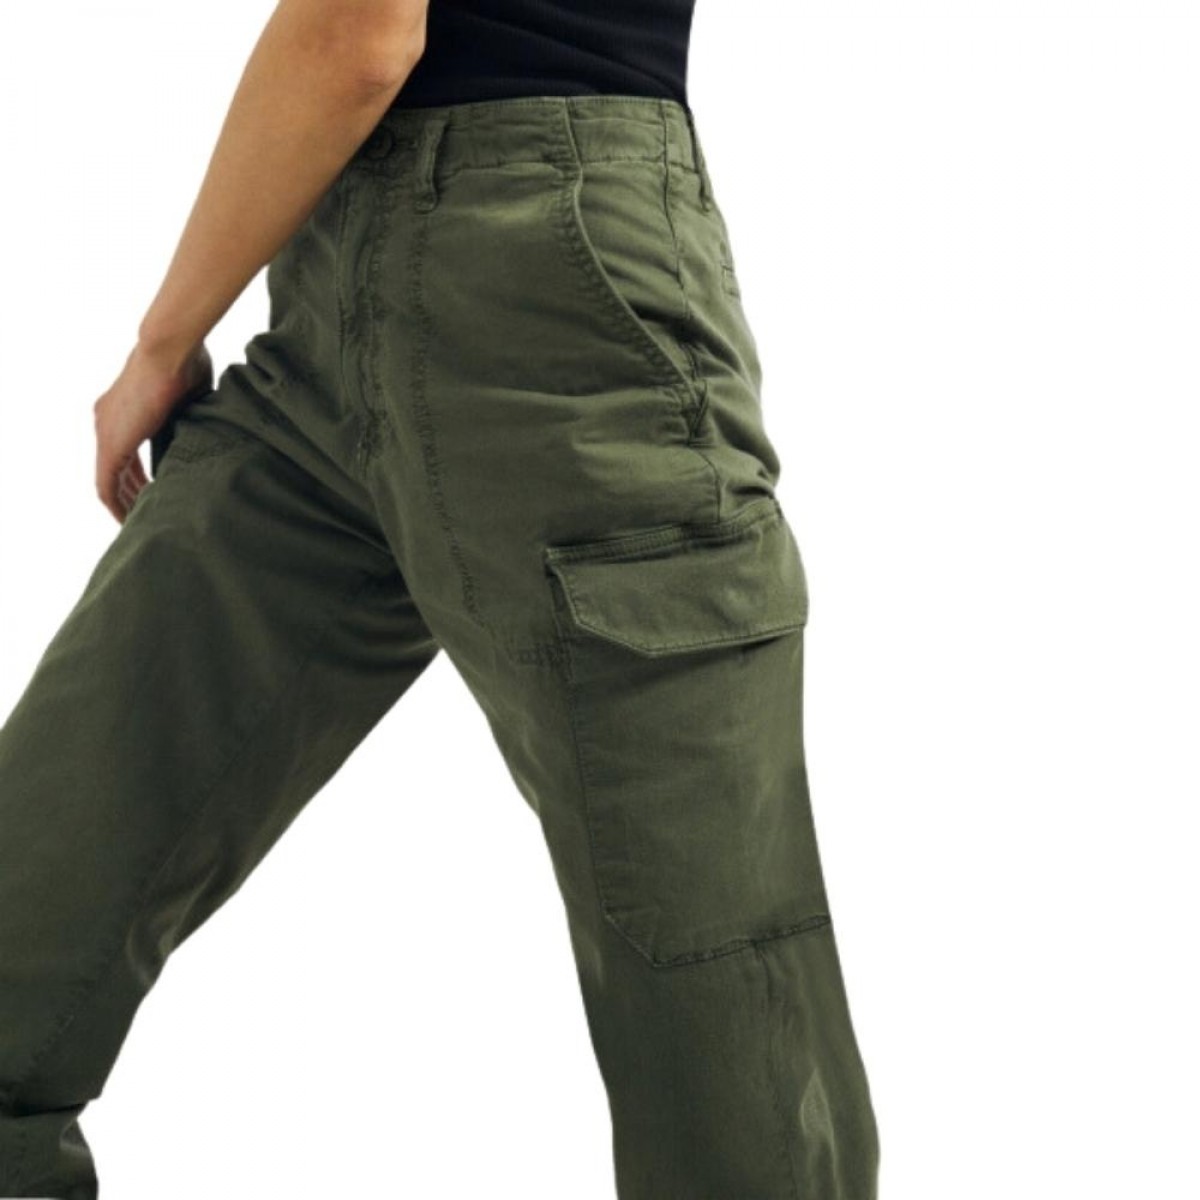 battle cargo pants - army - lårlomme fra siden 